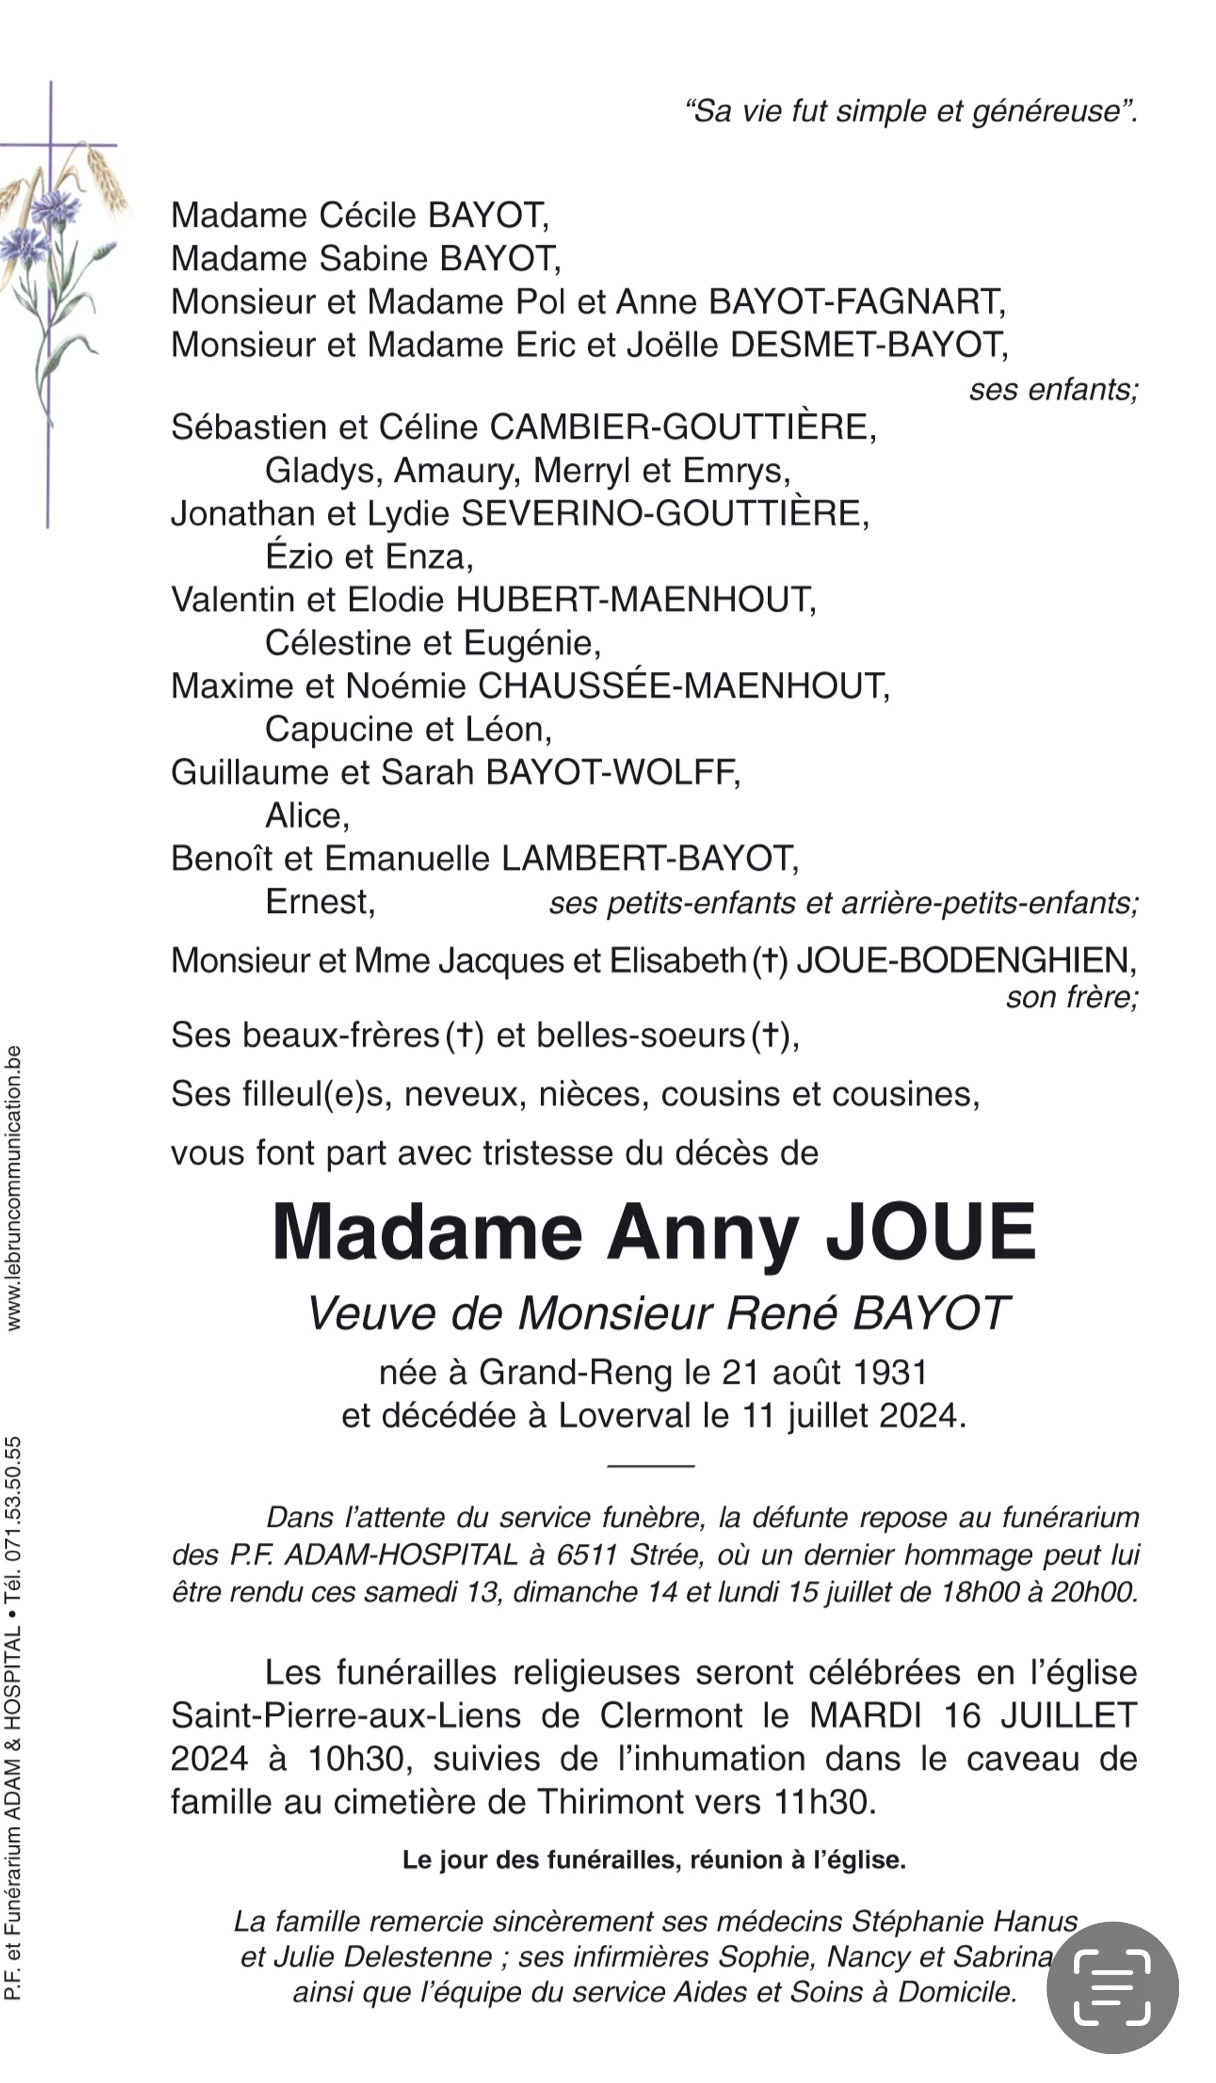 Madame Anny JOUE | Funérailles Adam Hospital